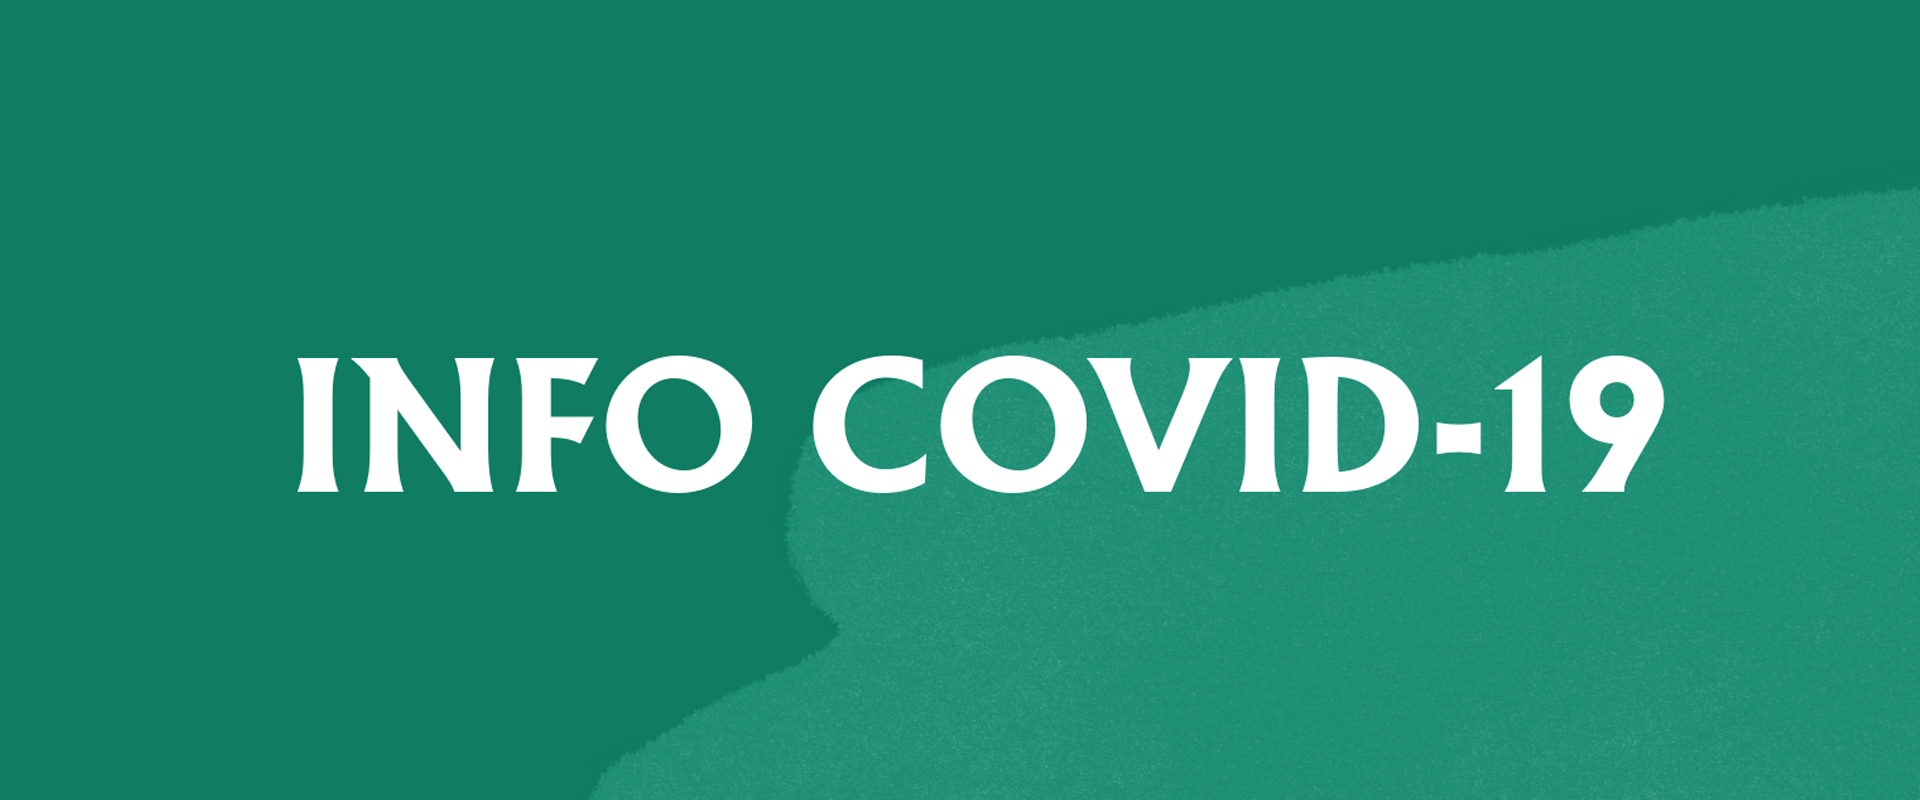 Cover page COVID19 2